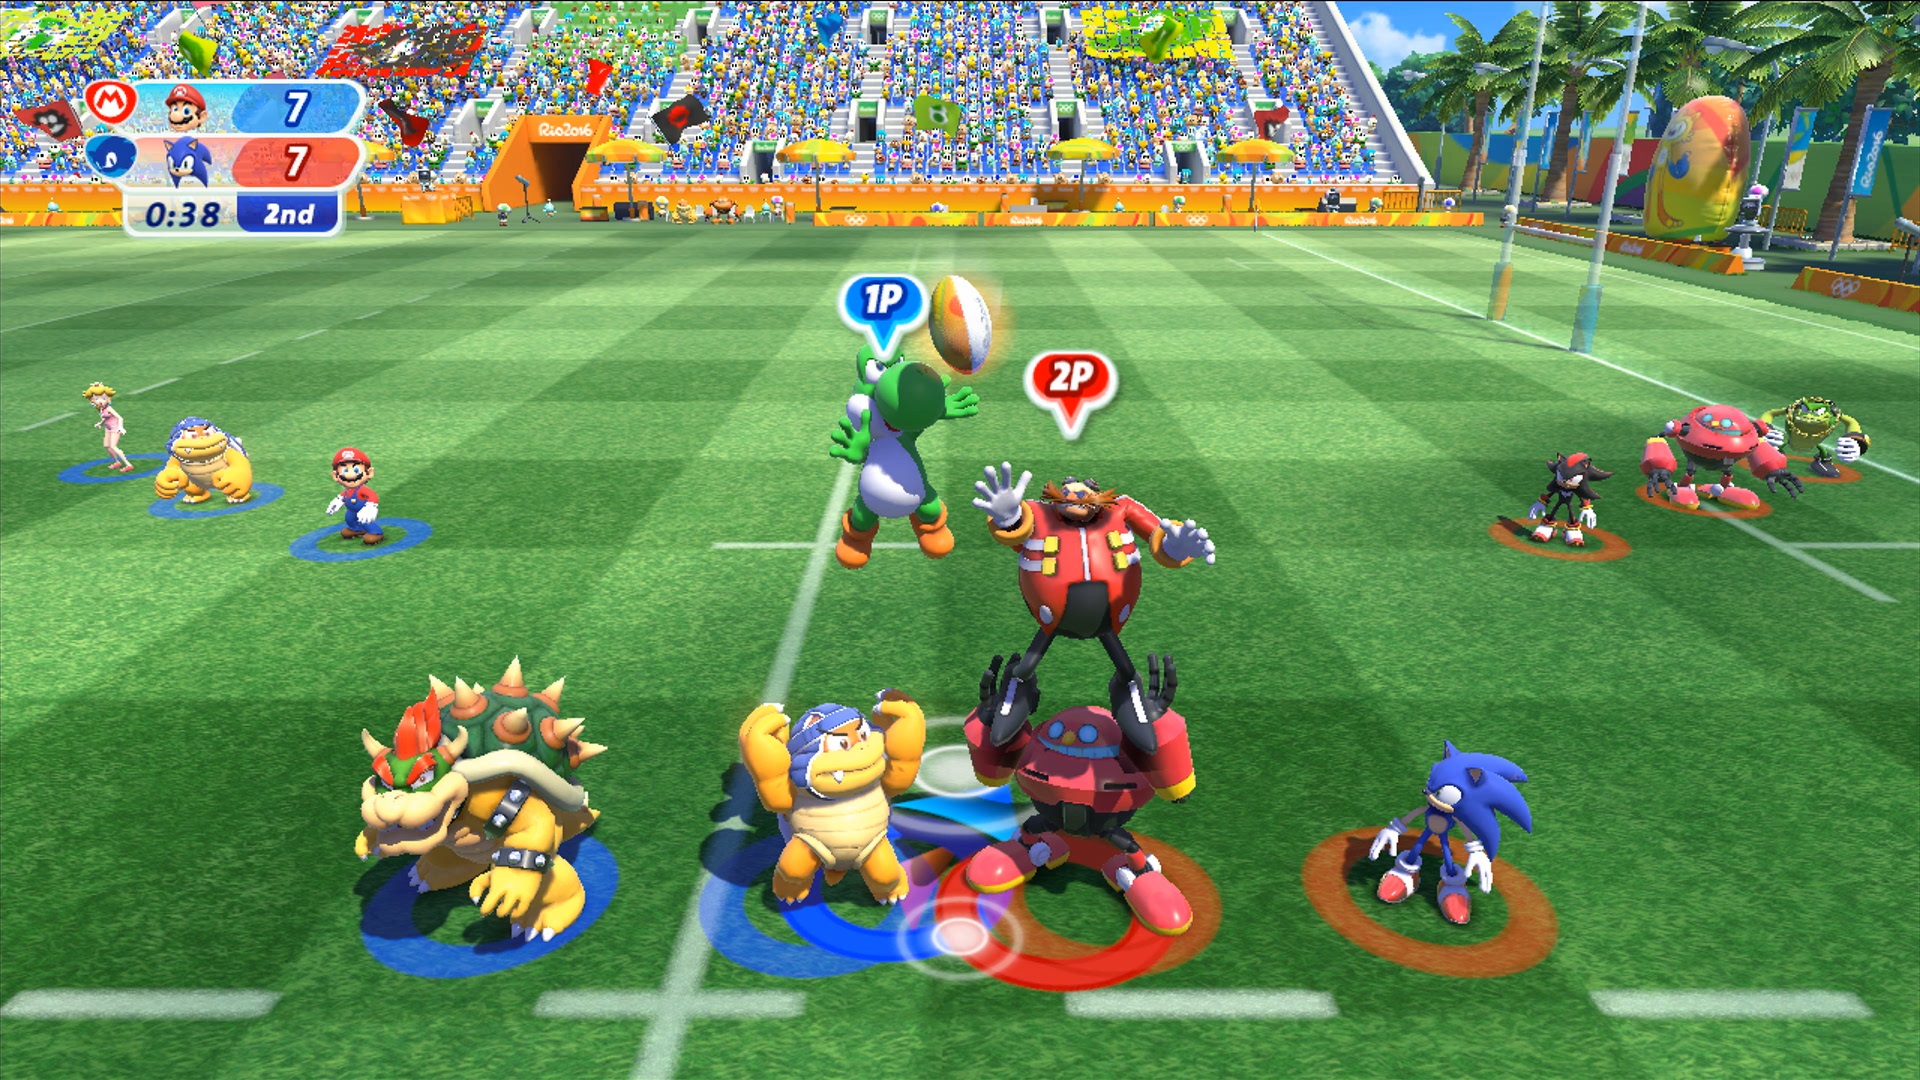 Profetie Afstoting Kamer Mario & Sonic at the Rio 2016 Olympic Games™ | Wii U games | Games |  Nintendo